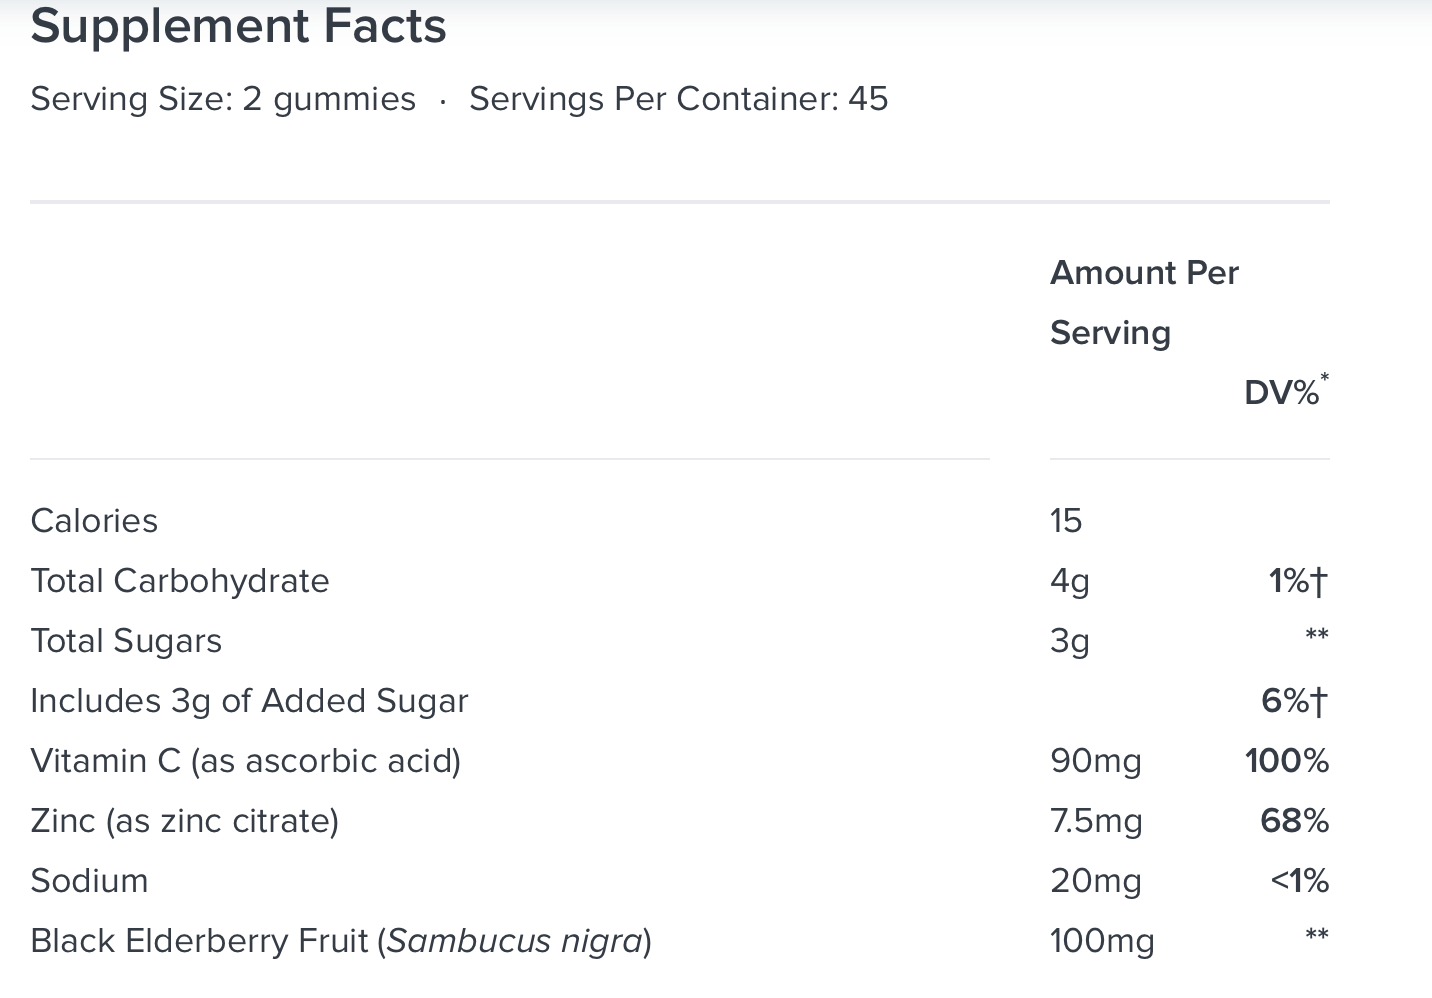 Focus Elderberry Antioxidant & Promotes Healthy Heart - Gummies - Senior.com Vitamins & Supplements